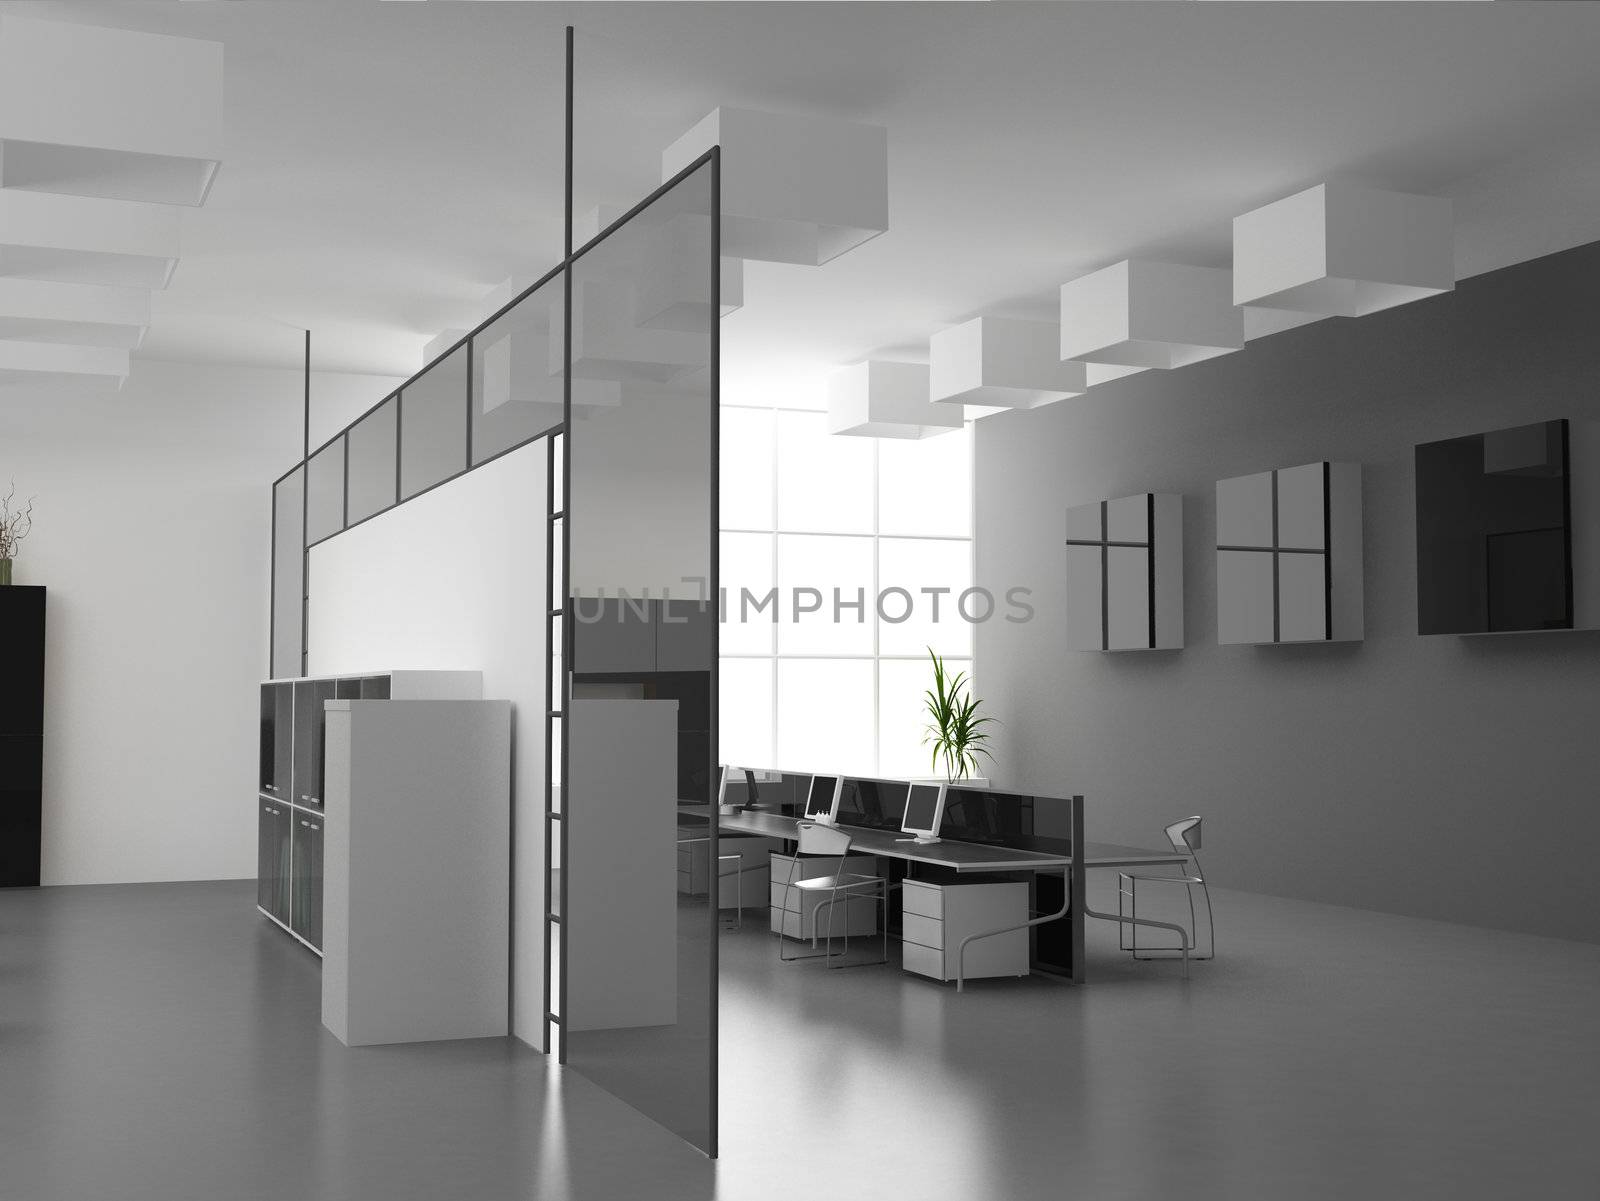 the modern office interior design (3d render)
